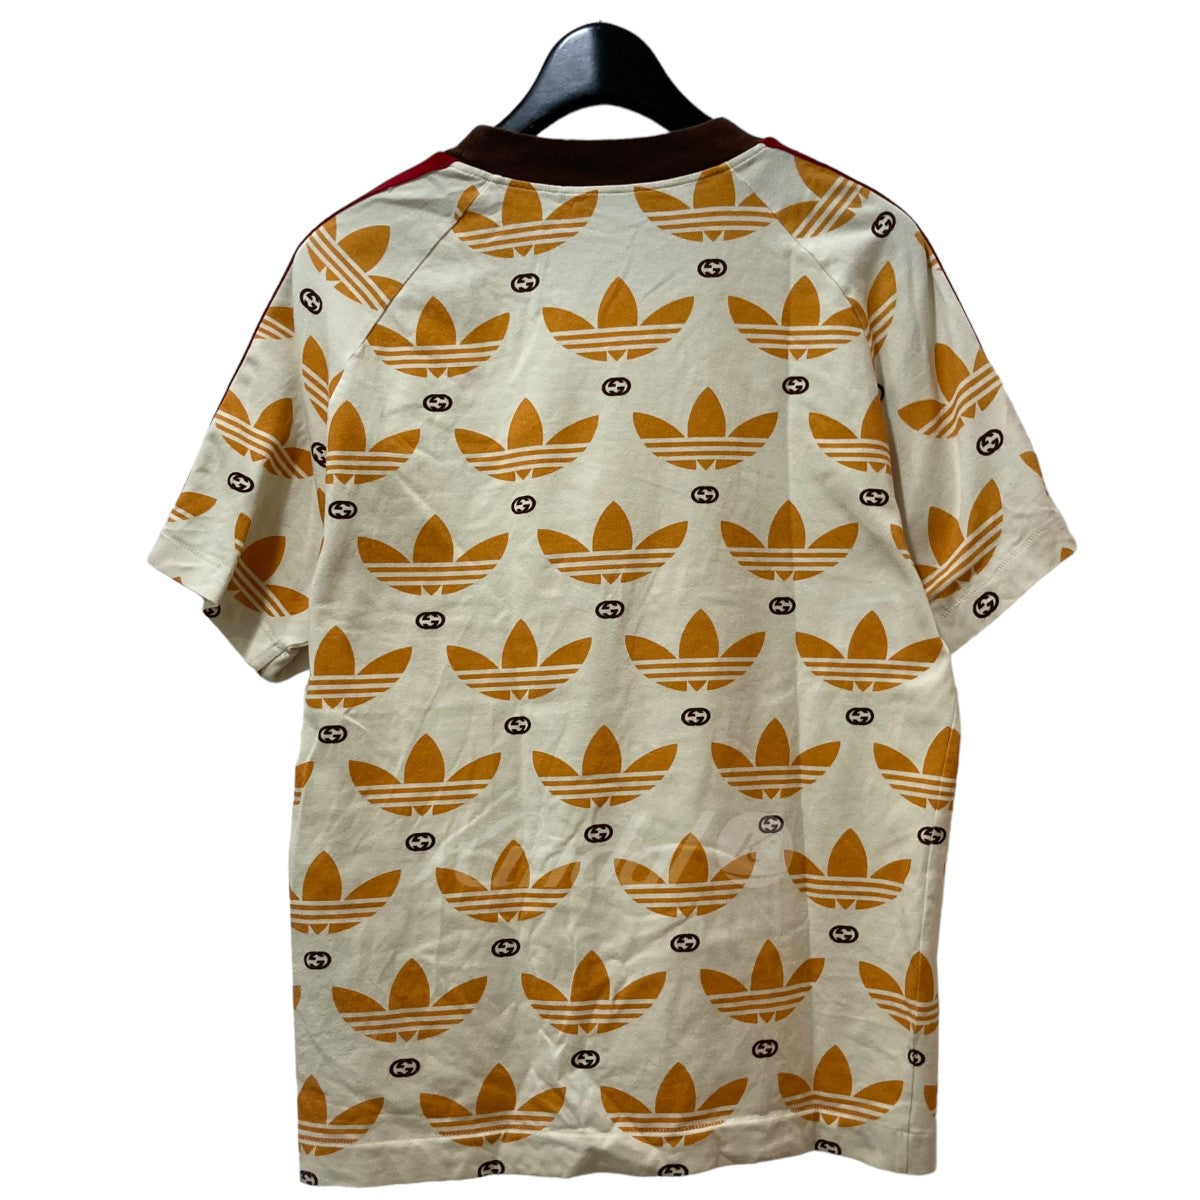 GUCCI(グッチ) ×adidas TREFOIL PRINT TEE Tシャツ 692114 692114 